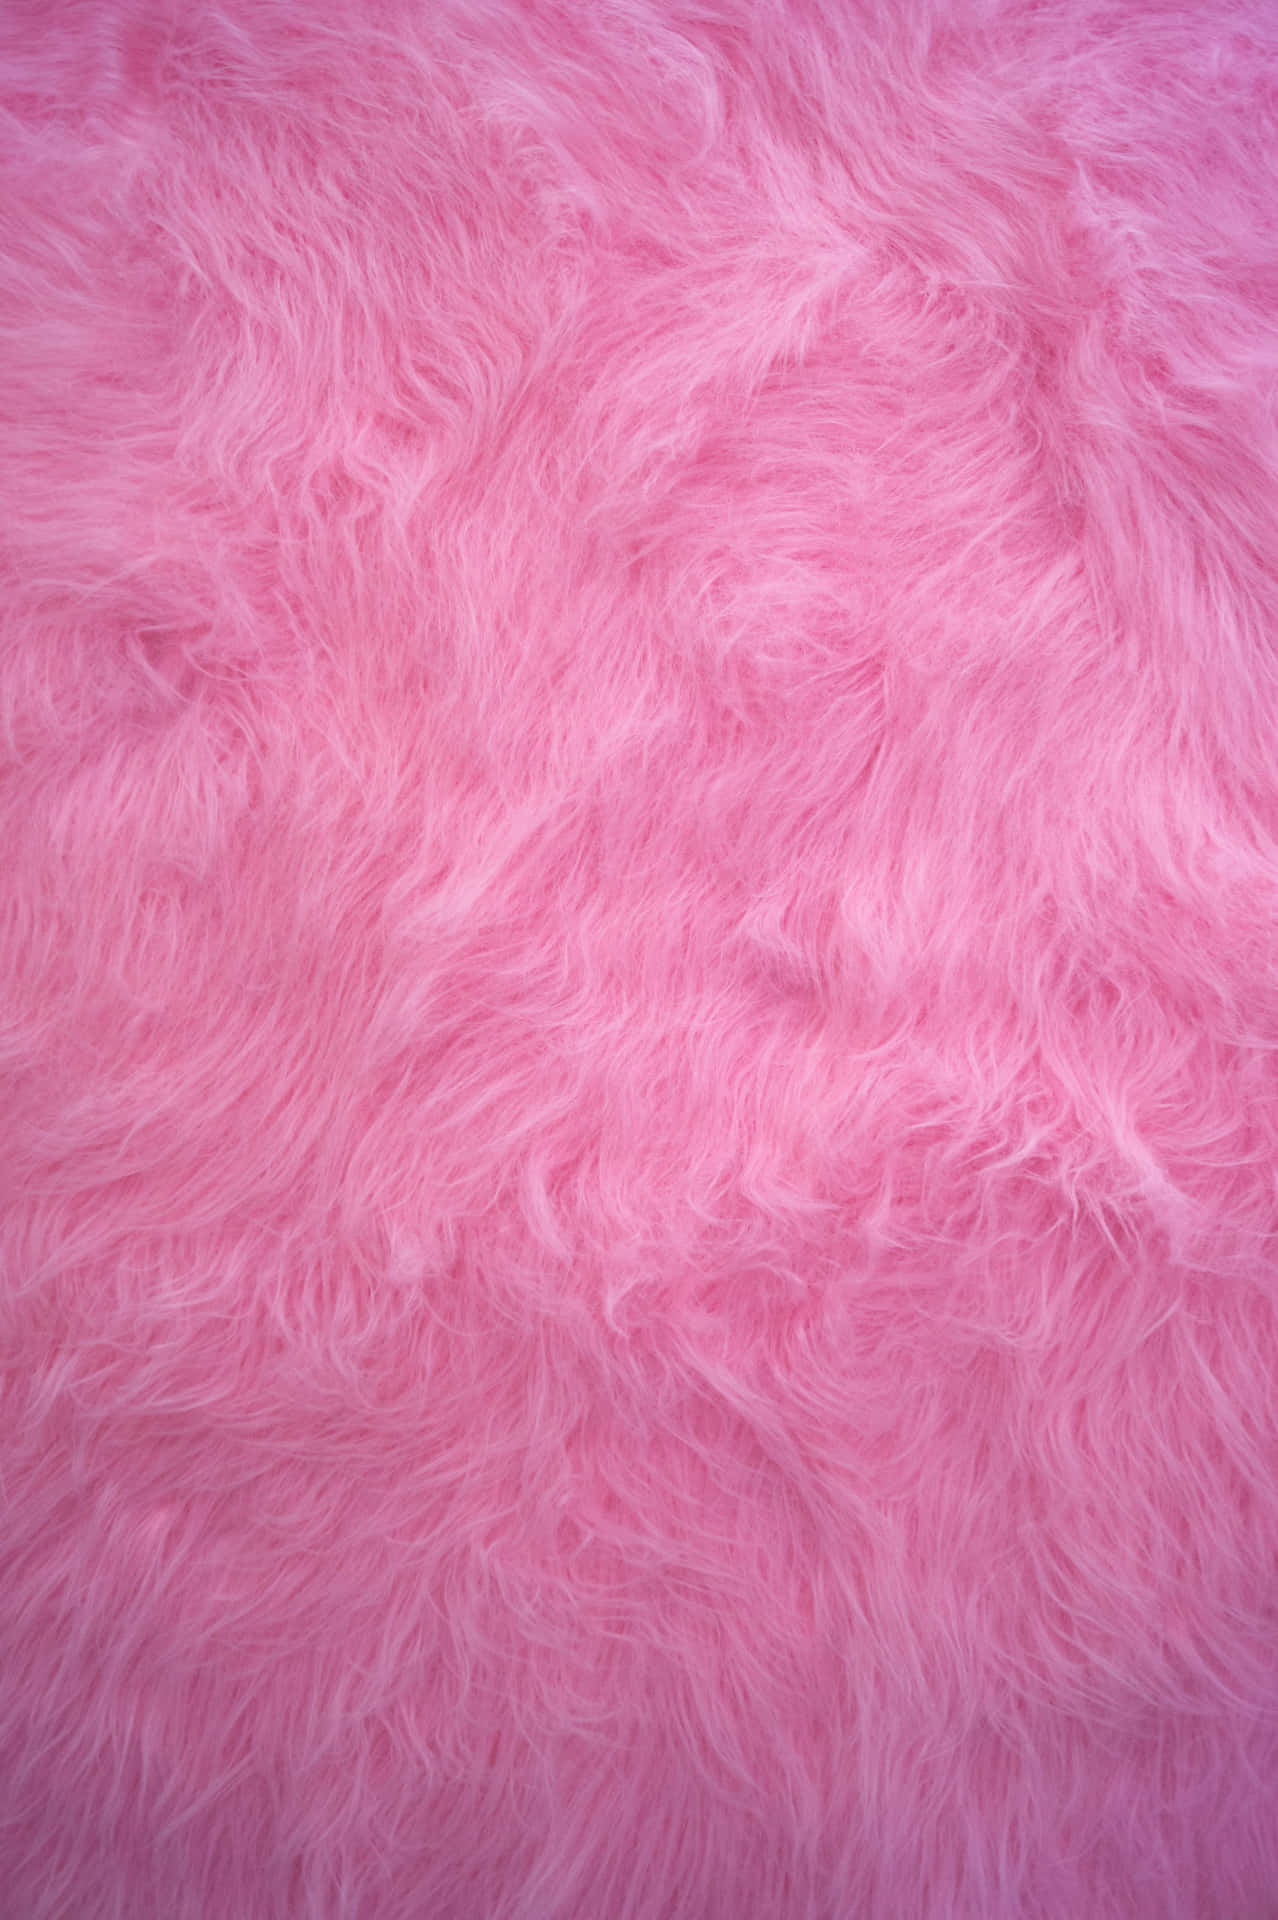 Fuzzy Pink Fur Wallpaper